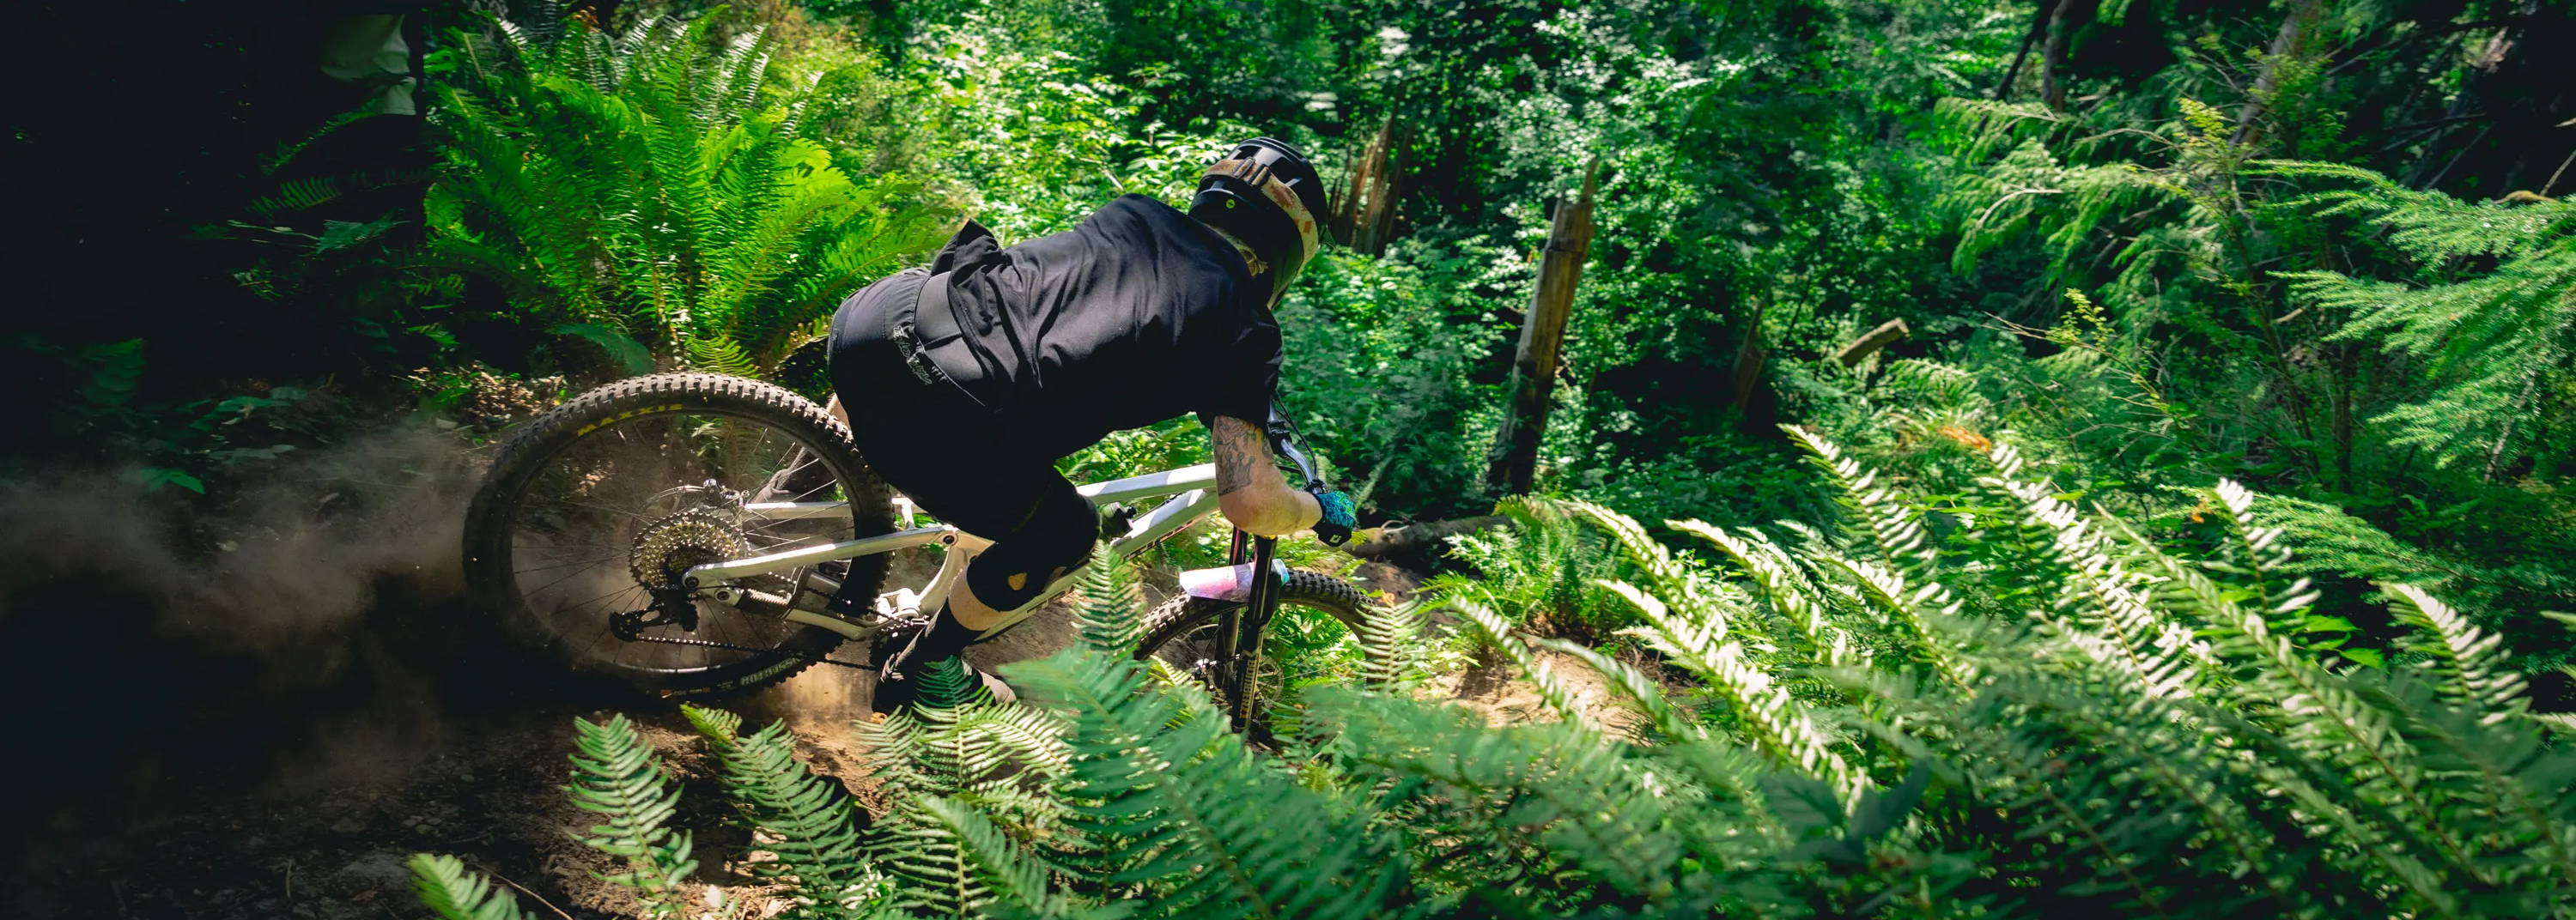 mountain biker riding through green ferns in bellingham washington